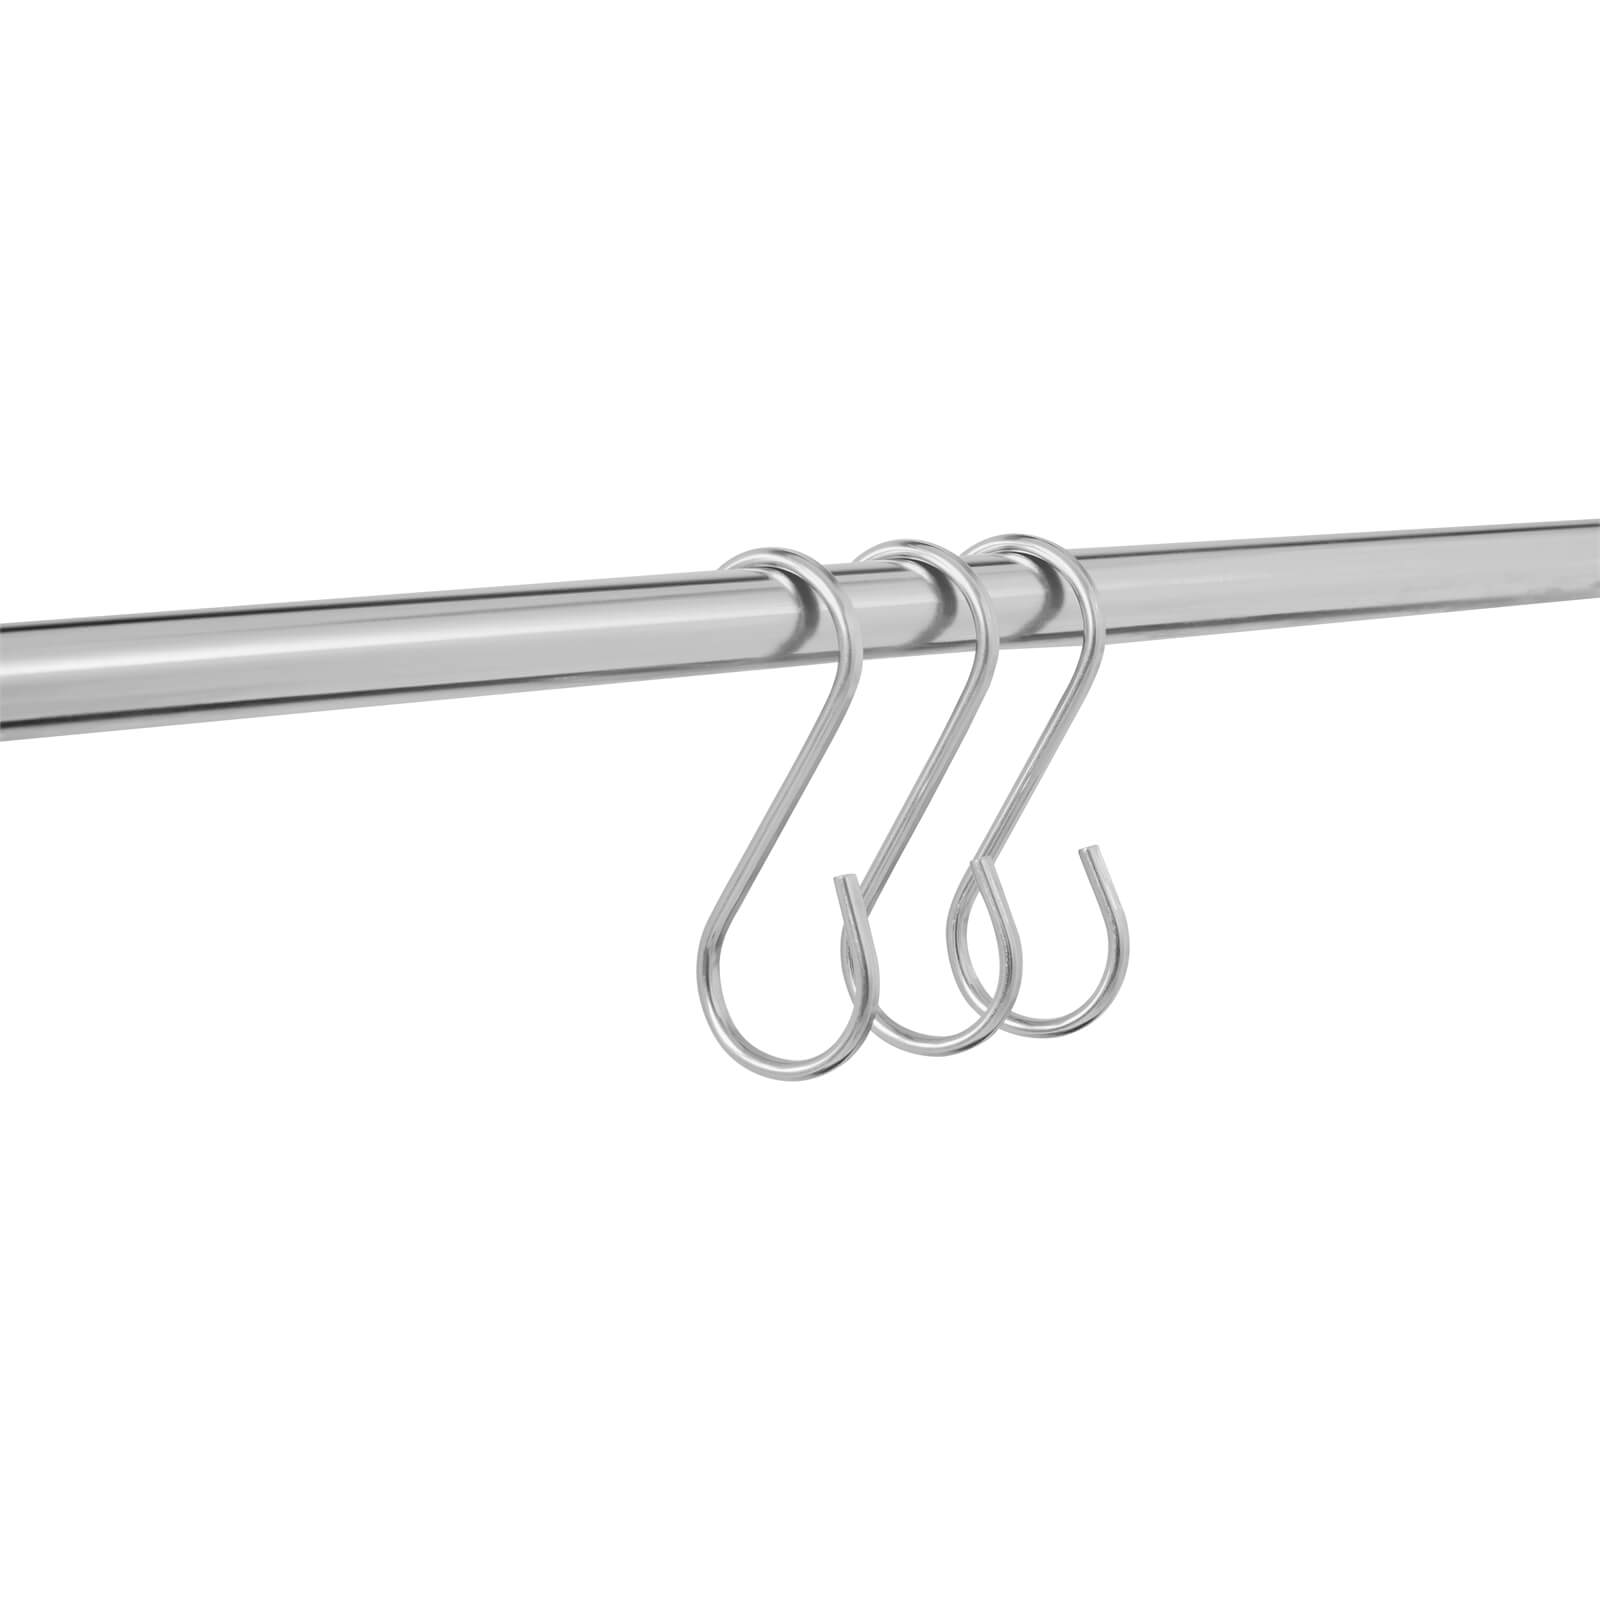 Sorello Brushed Steel Hooks - Set of 10